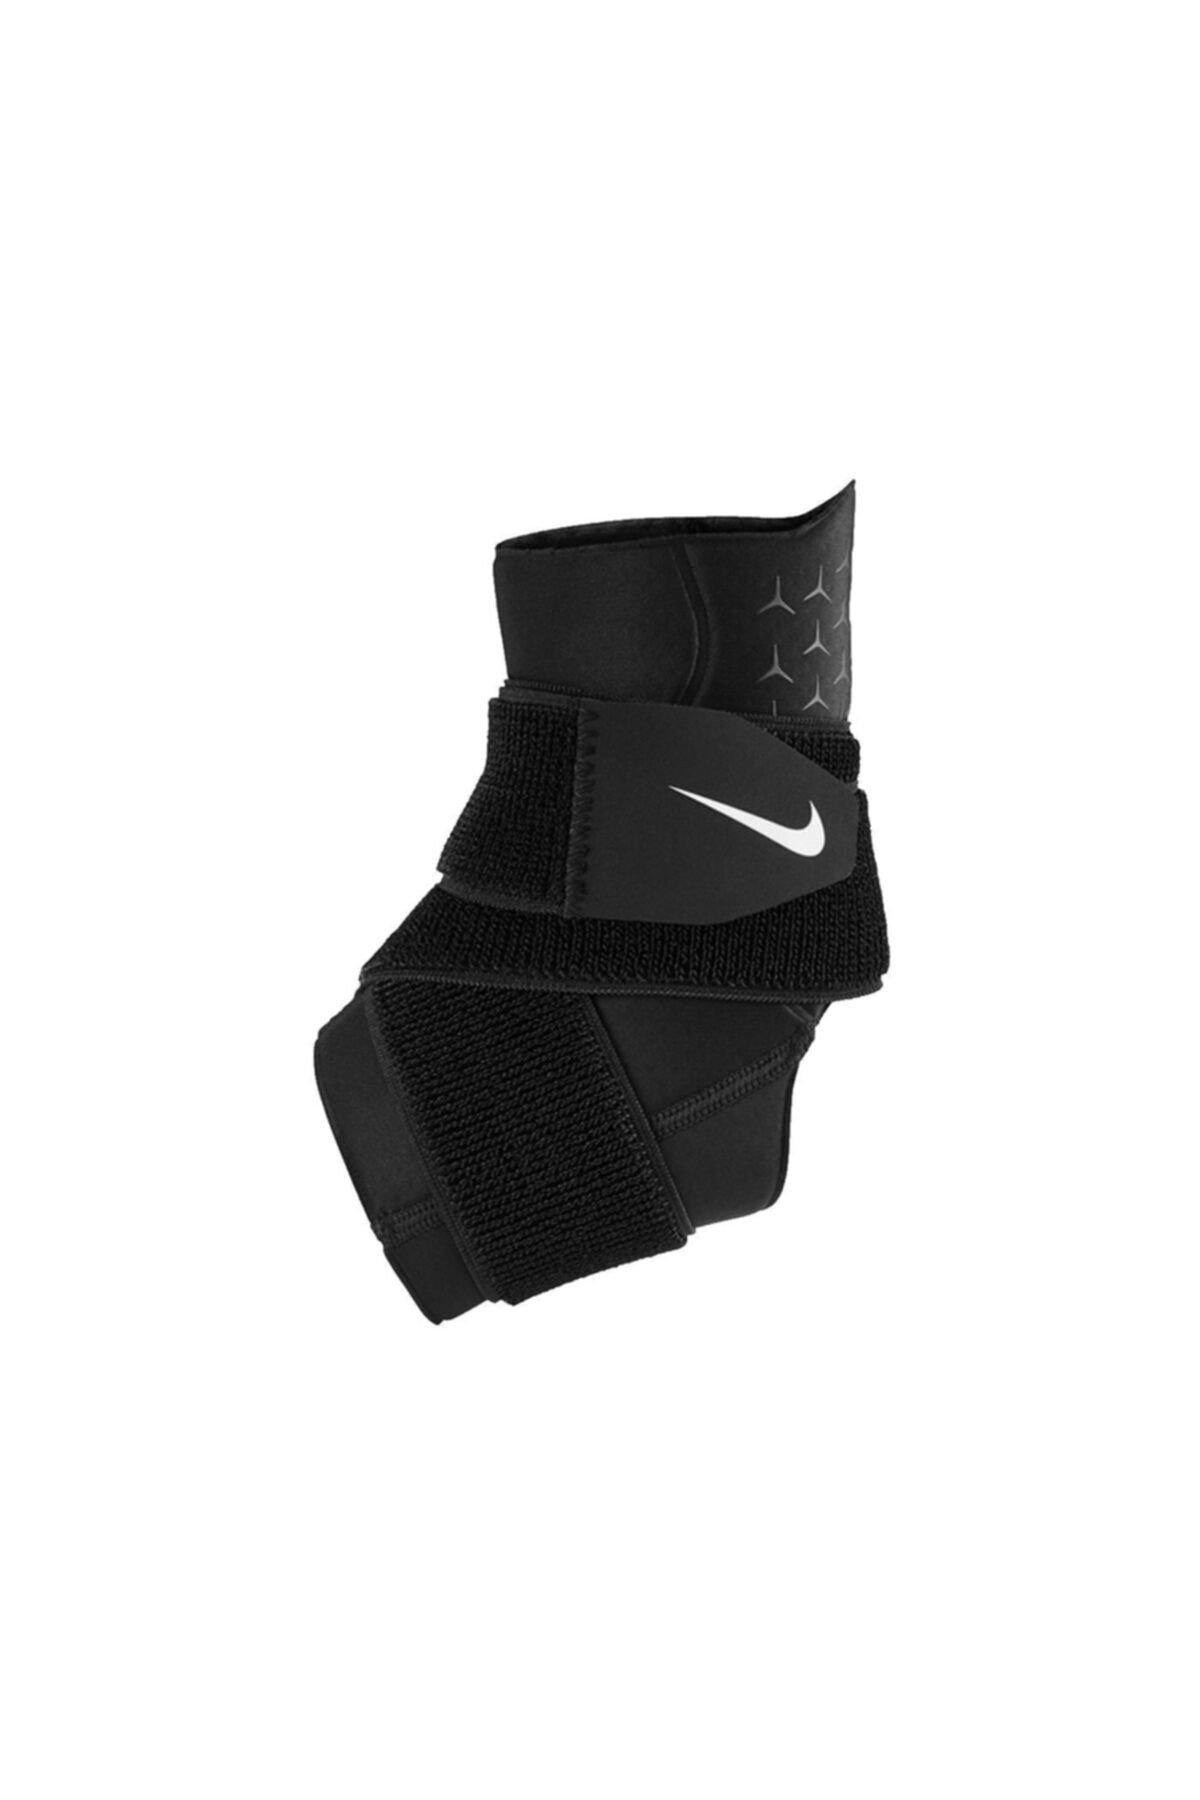 Nike Nıke Pro Ankle Strap Sleeve Black/whıte M